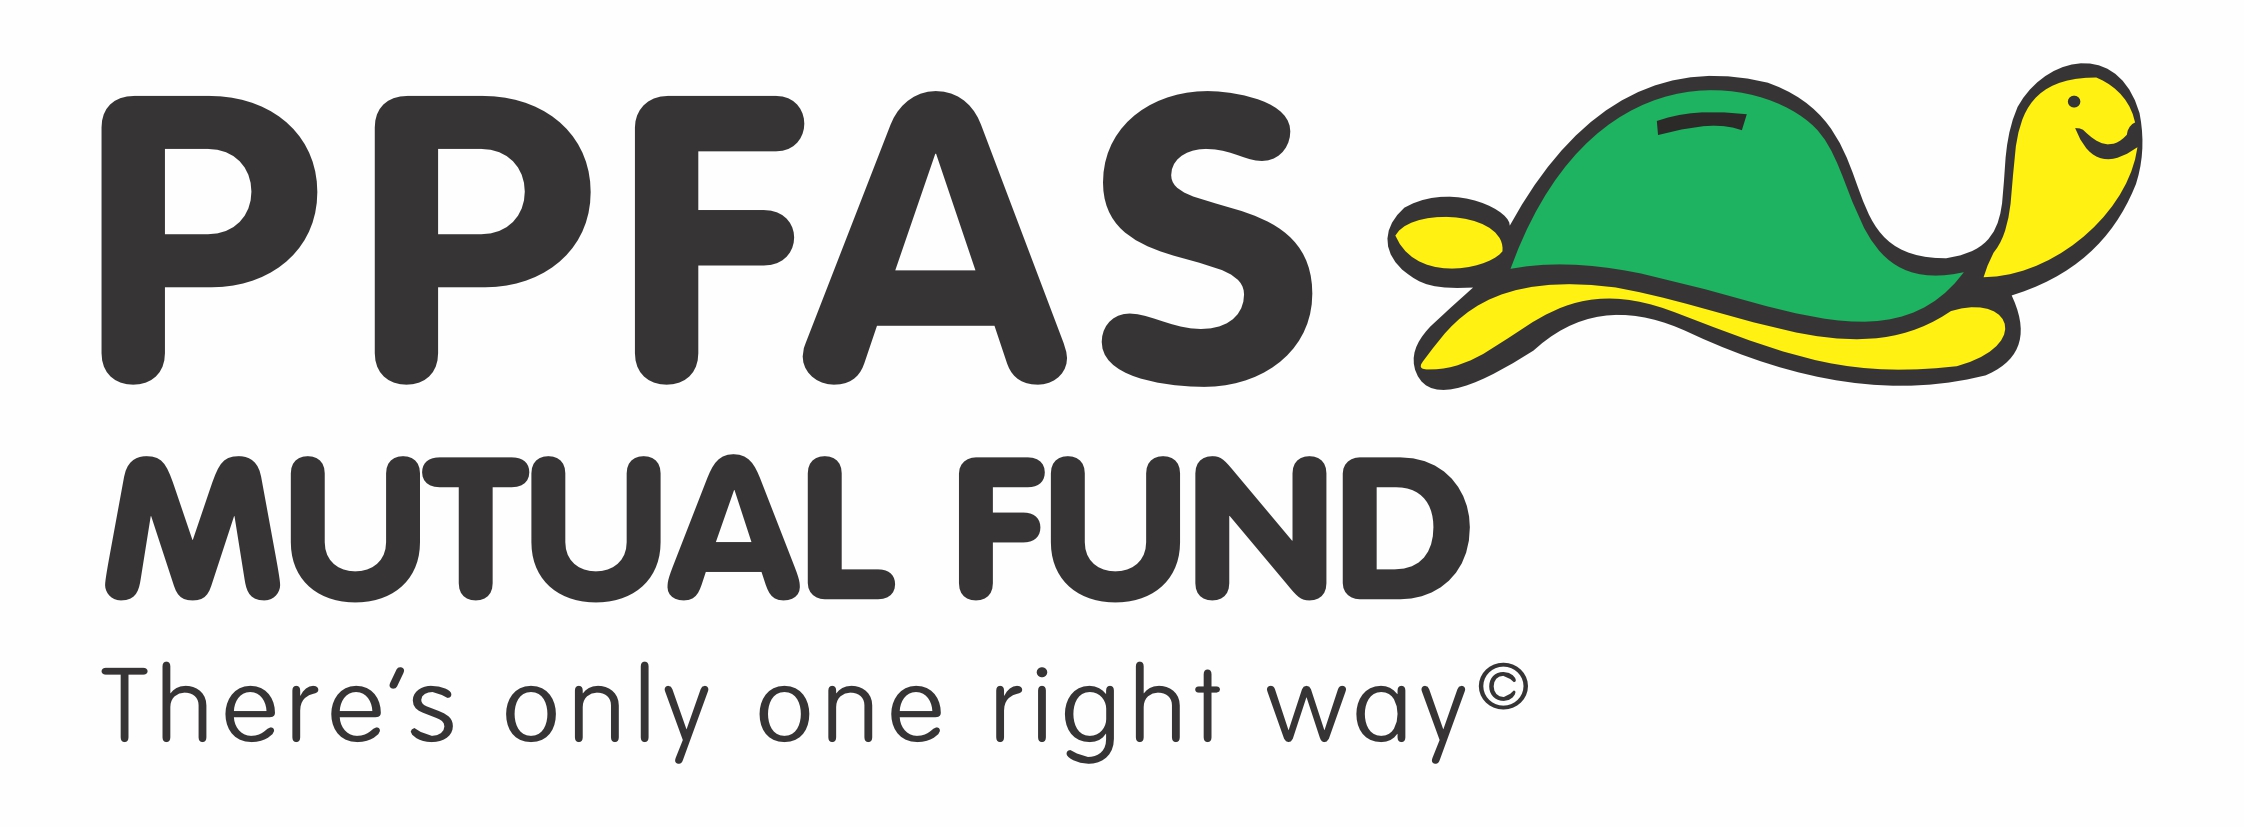 PPFAS mutual funds